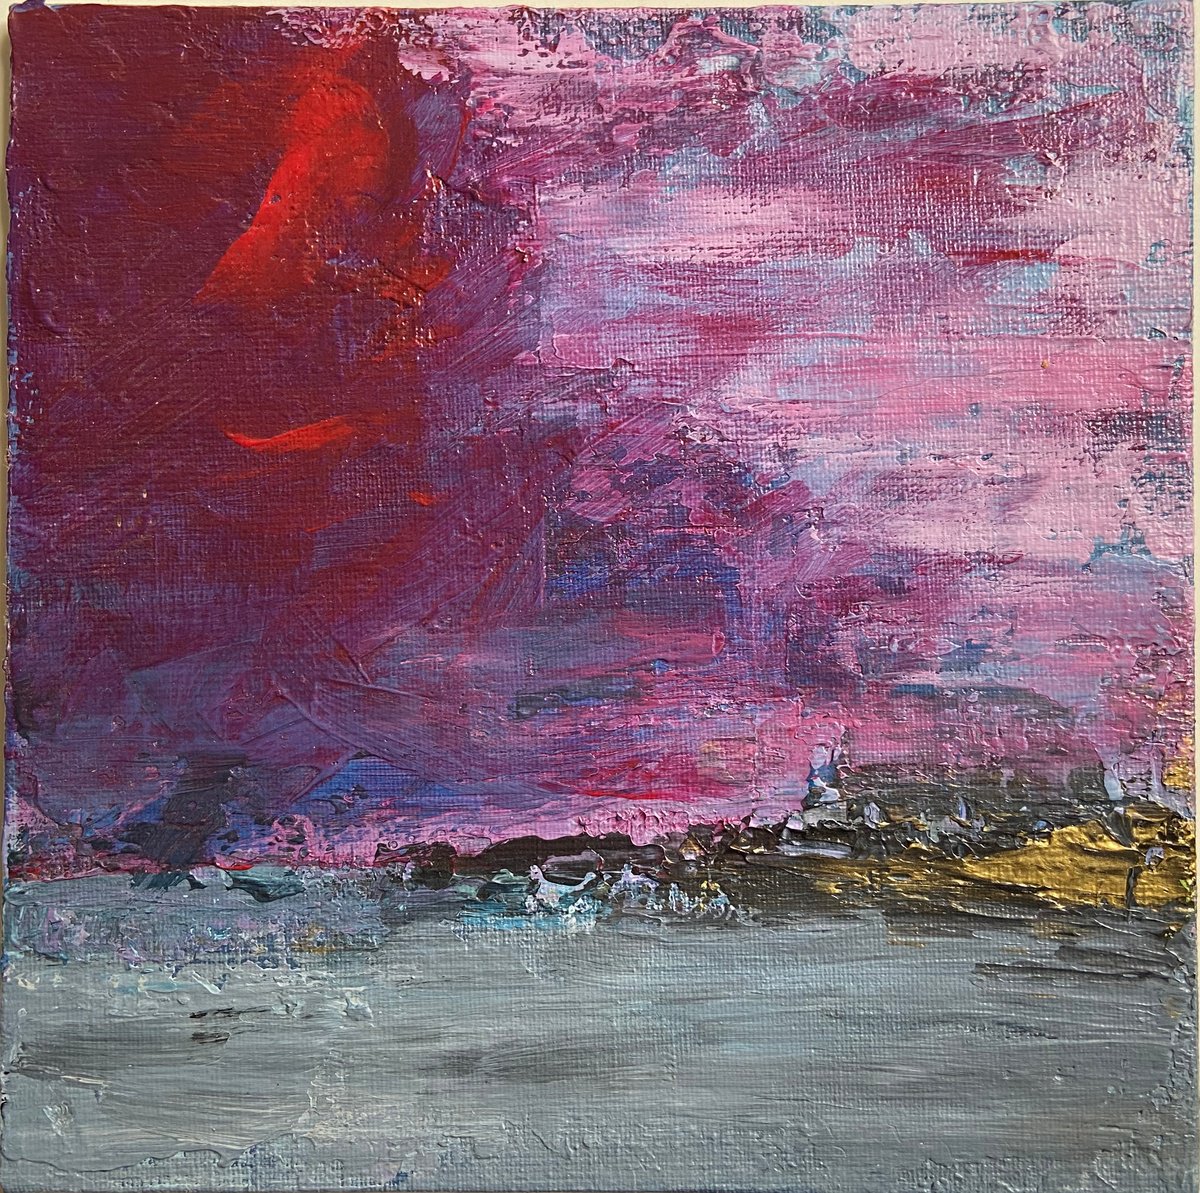 Storm - Small Abstract 003 by Maryna Vozniuk